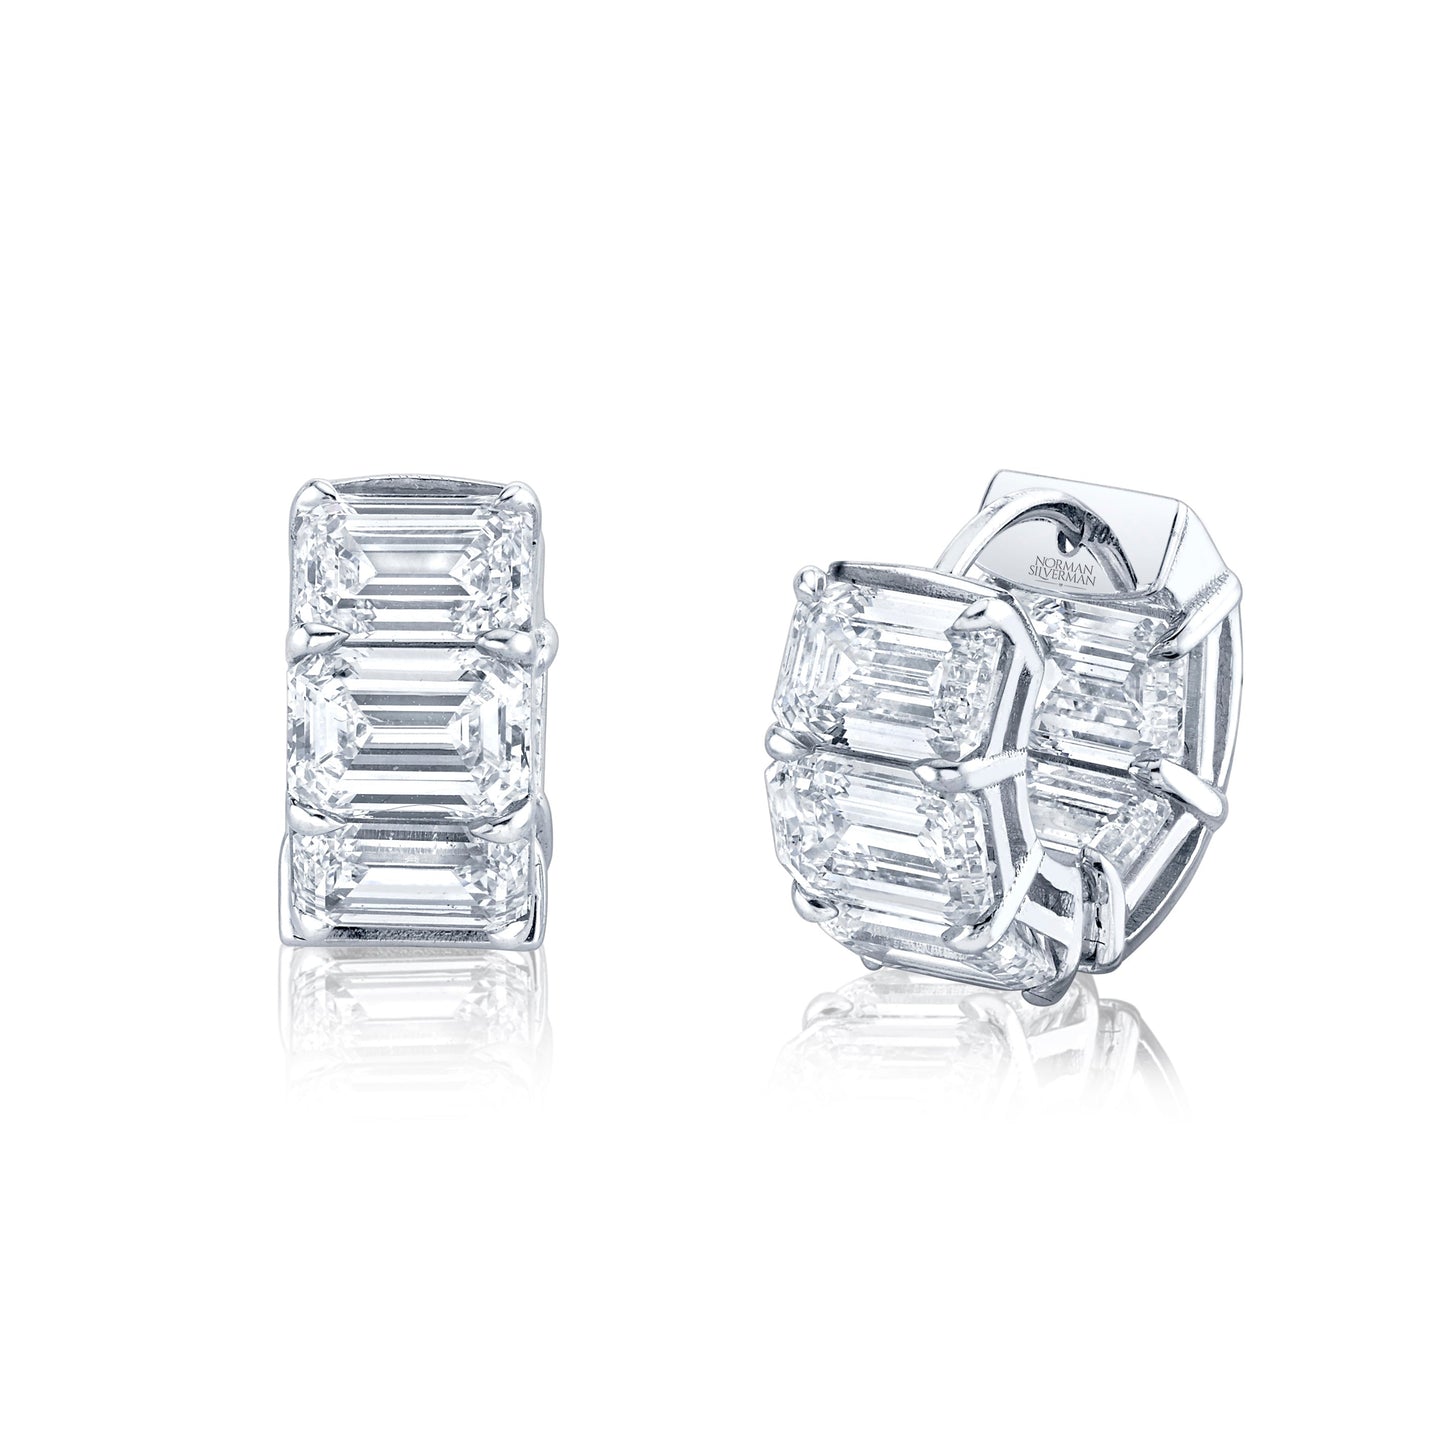 10 Carat Emerald Cut Diamond Huggie Earrings